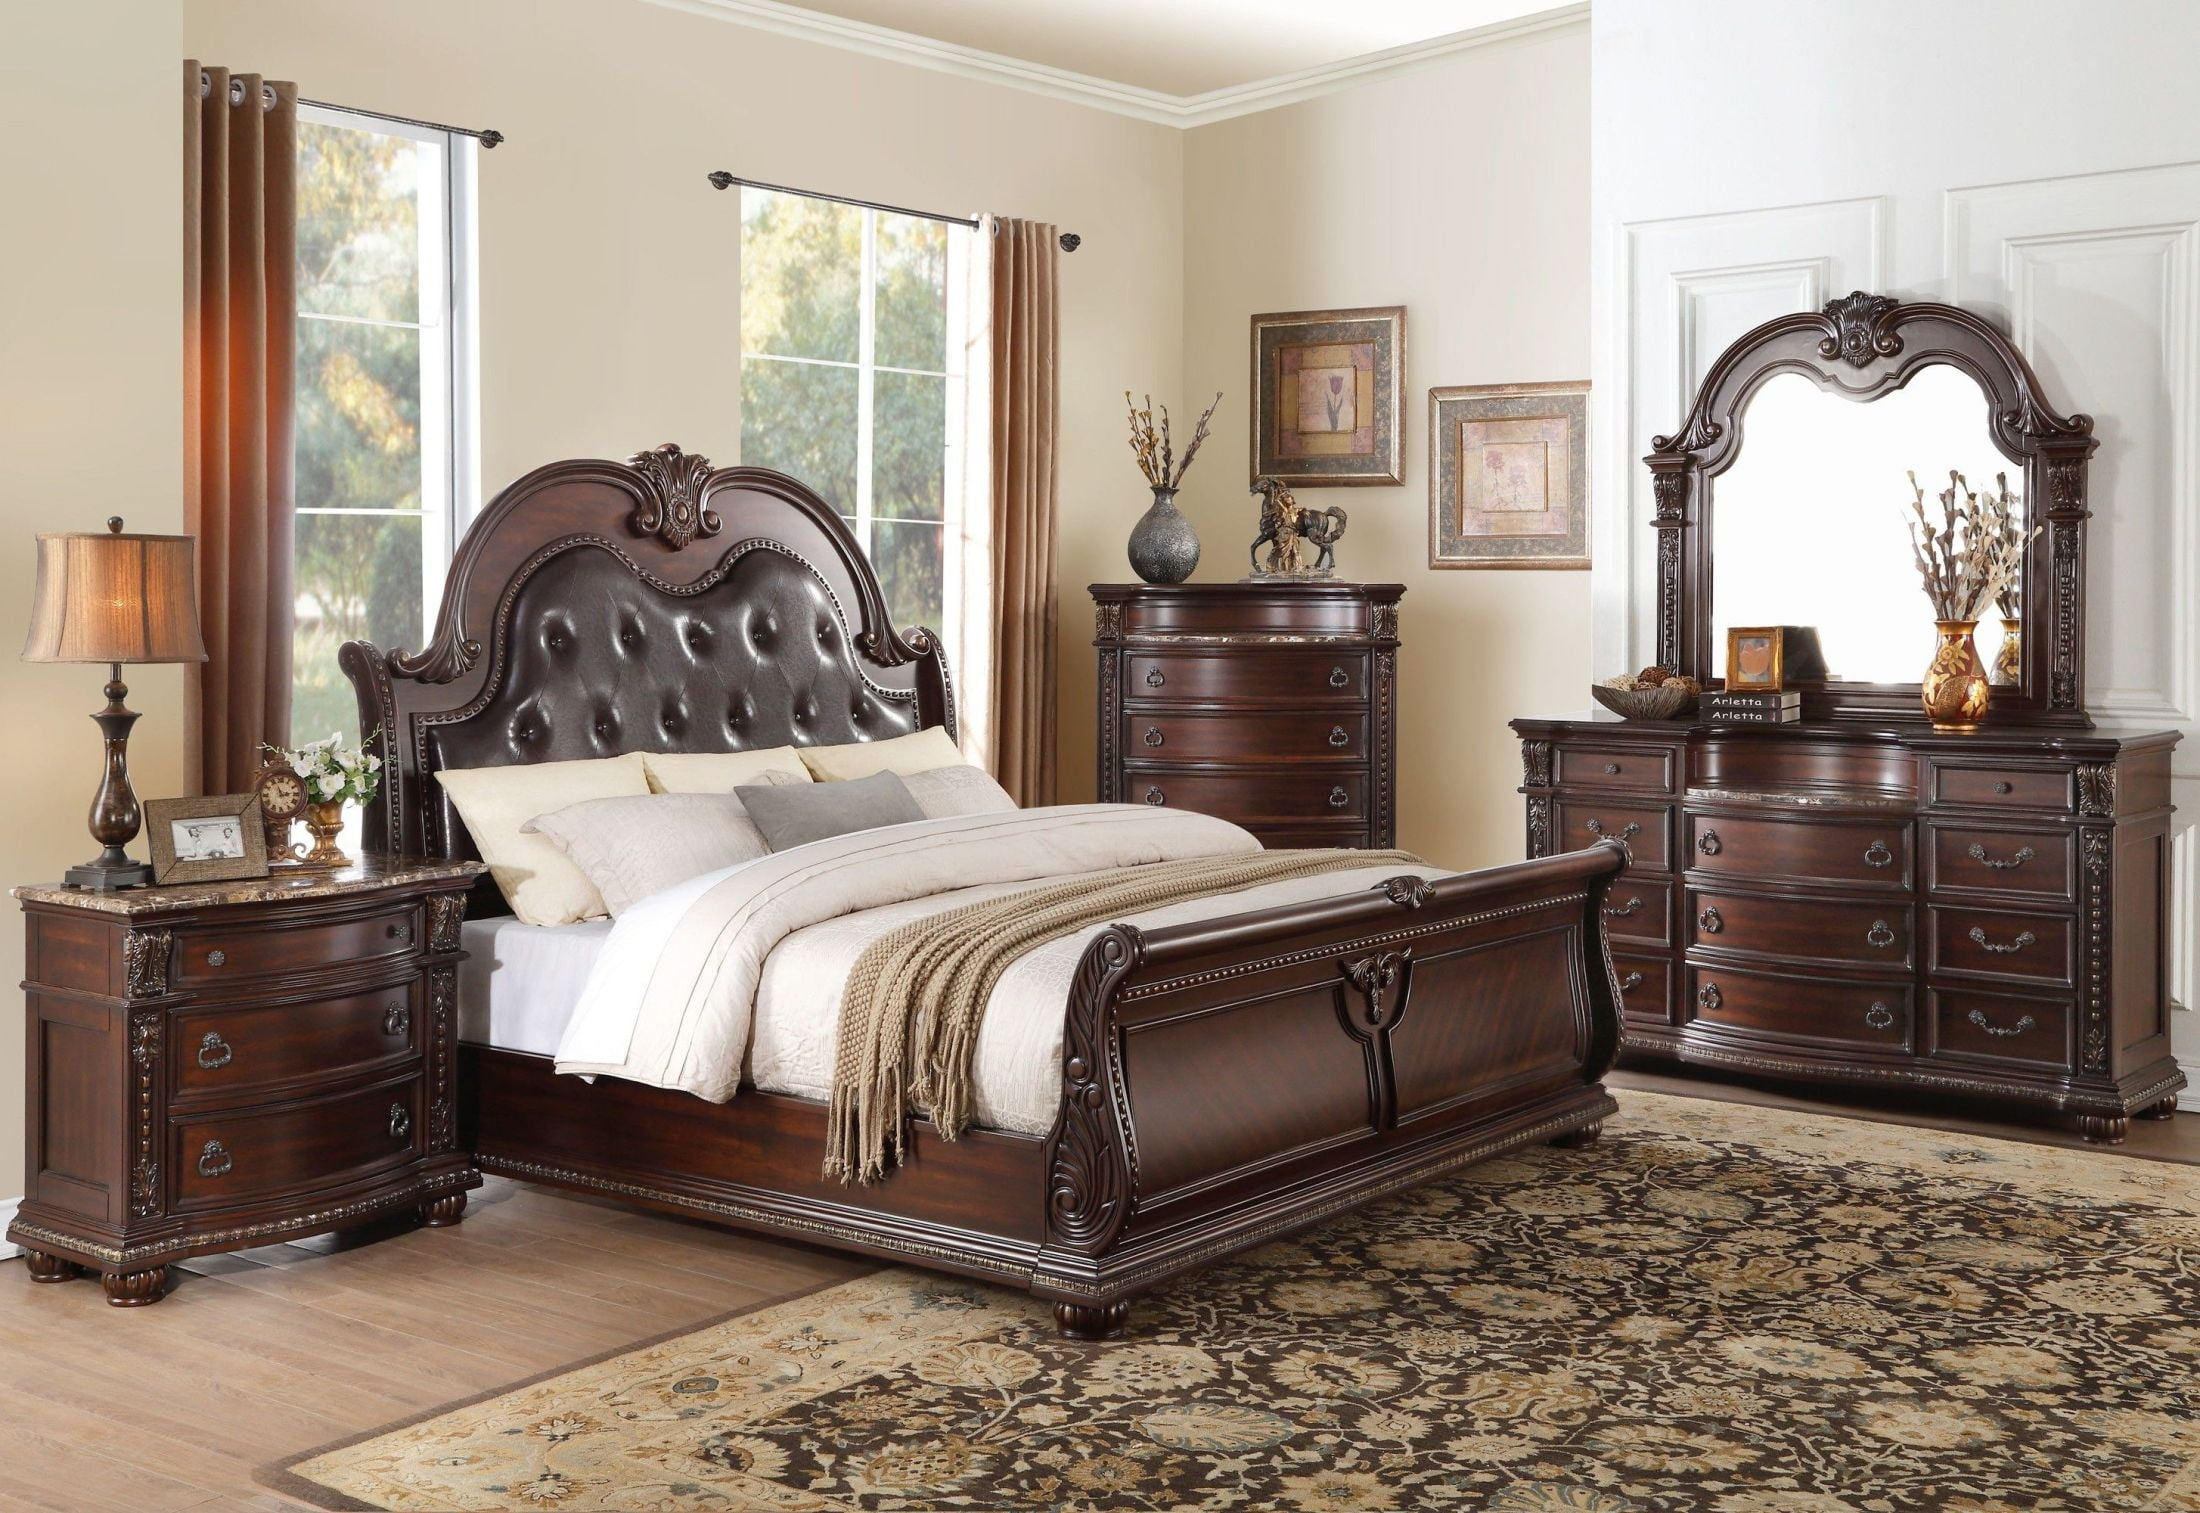 cavalier antique bedroom furniture